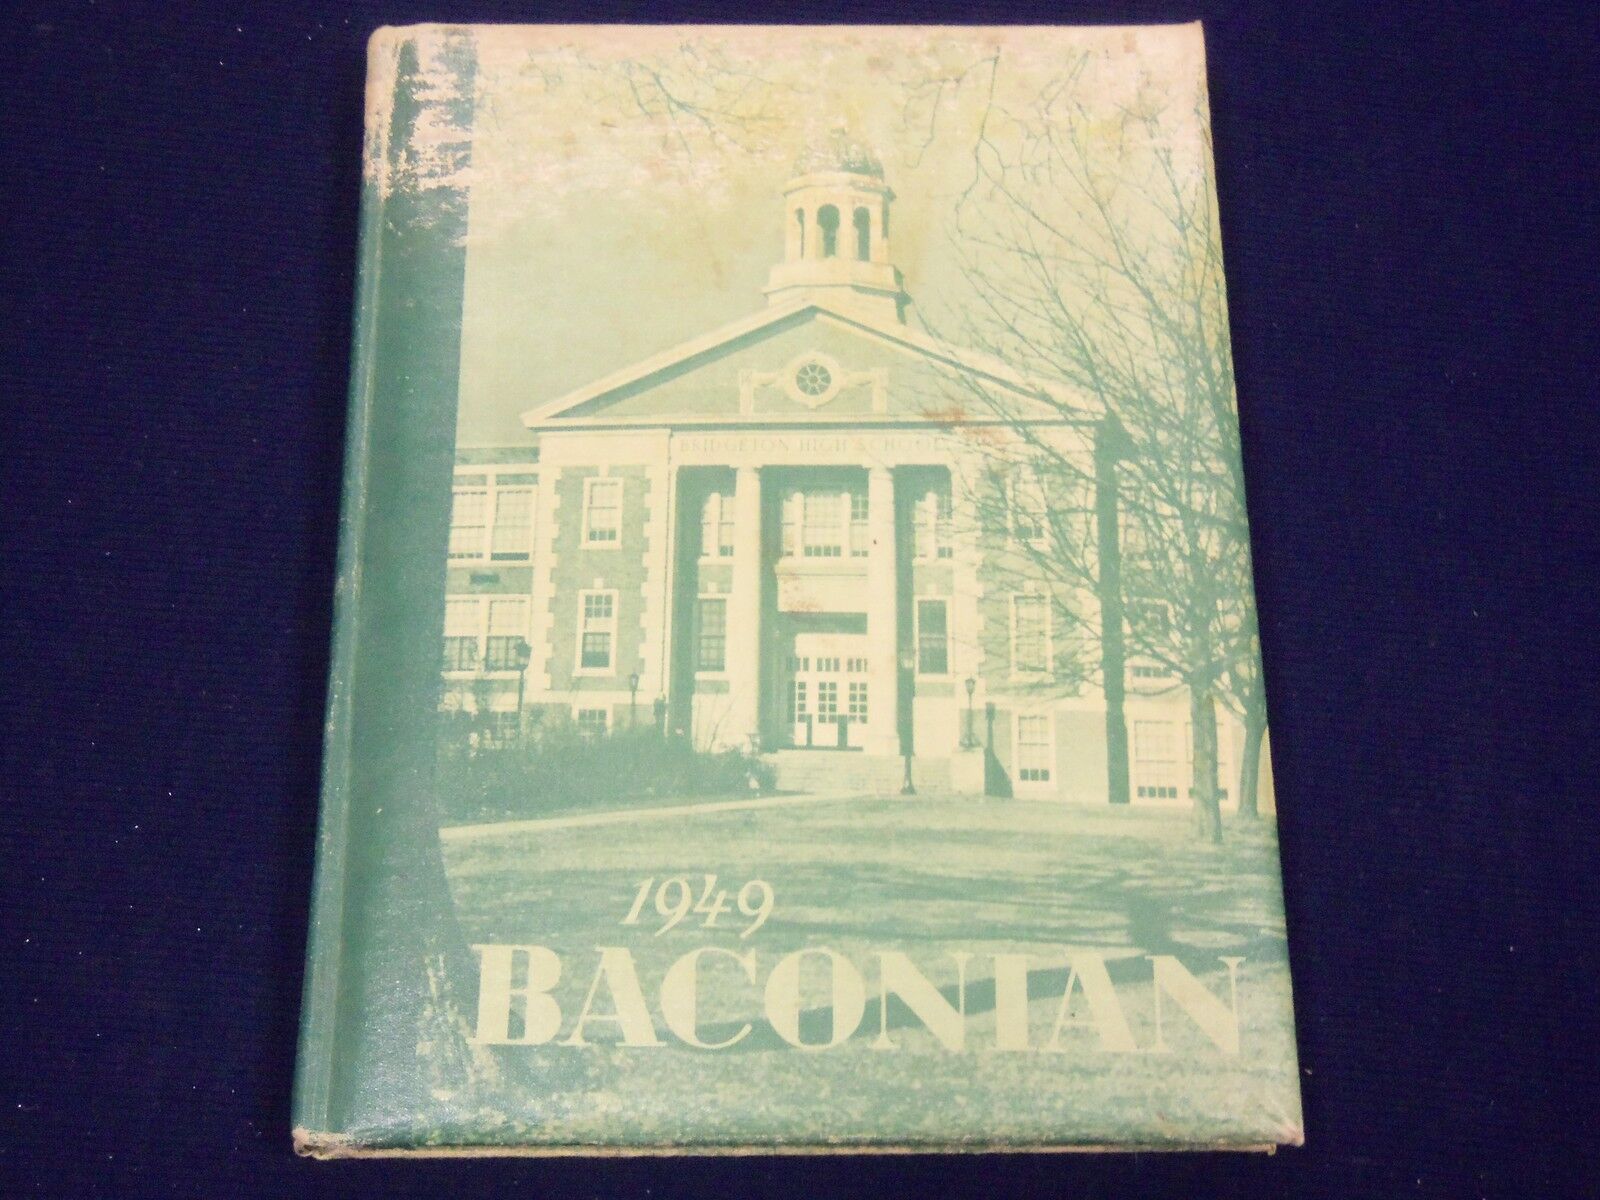 1949 BRIDGETON HIGH SCHOOL YEARBOOK - BACONIAN - GREAT PHOTOS - K 140